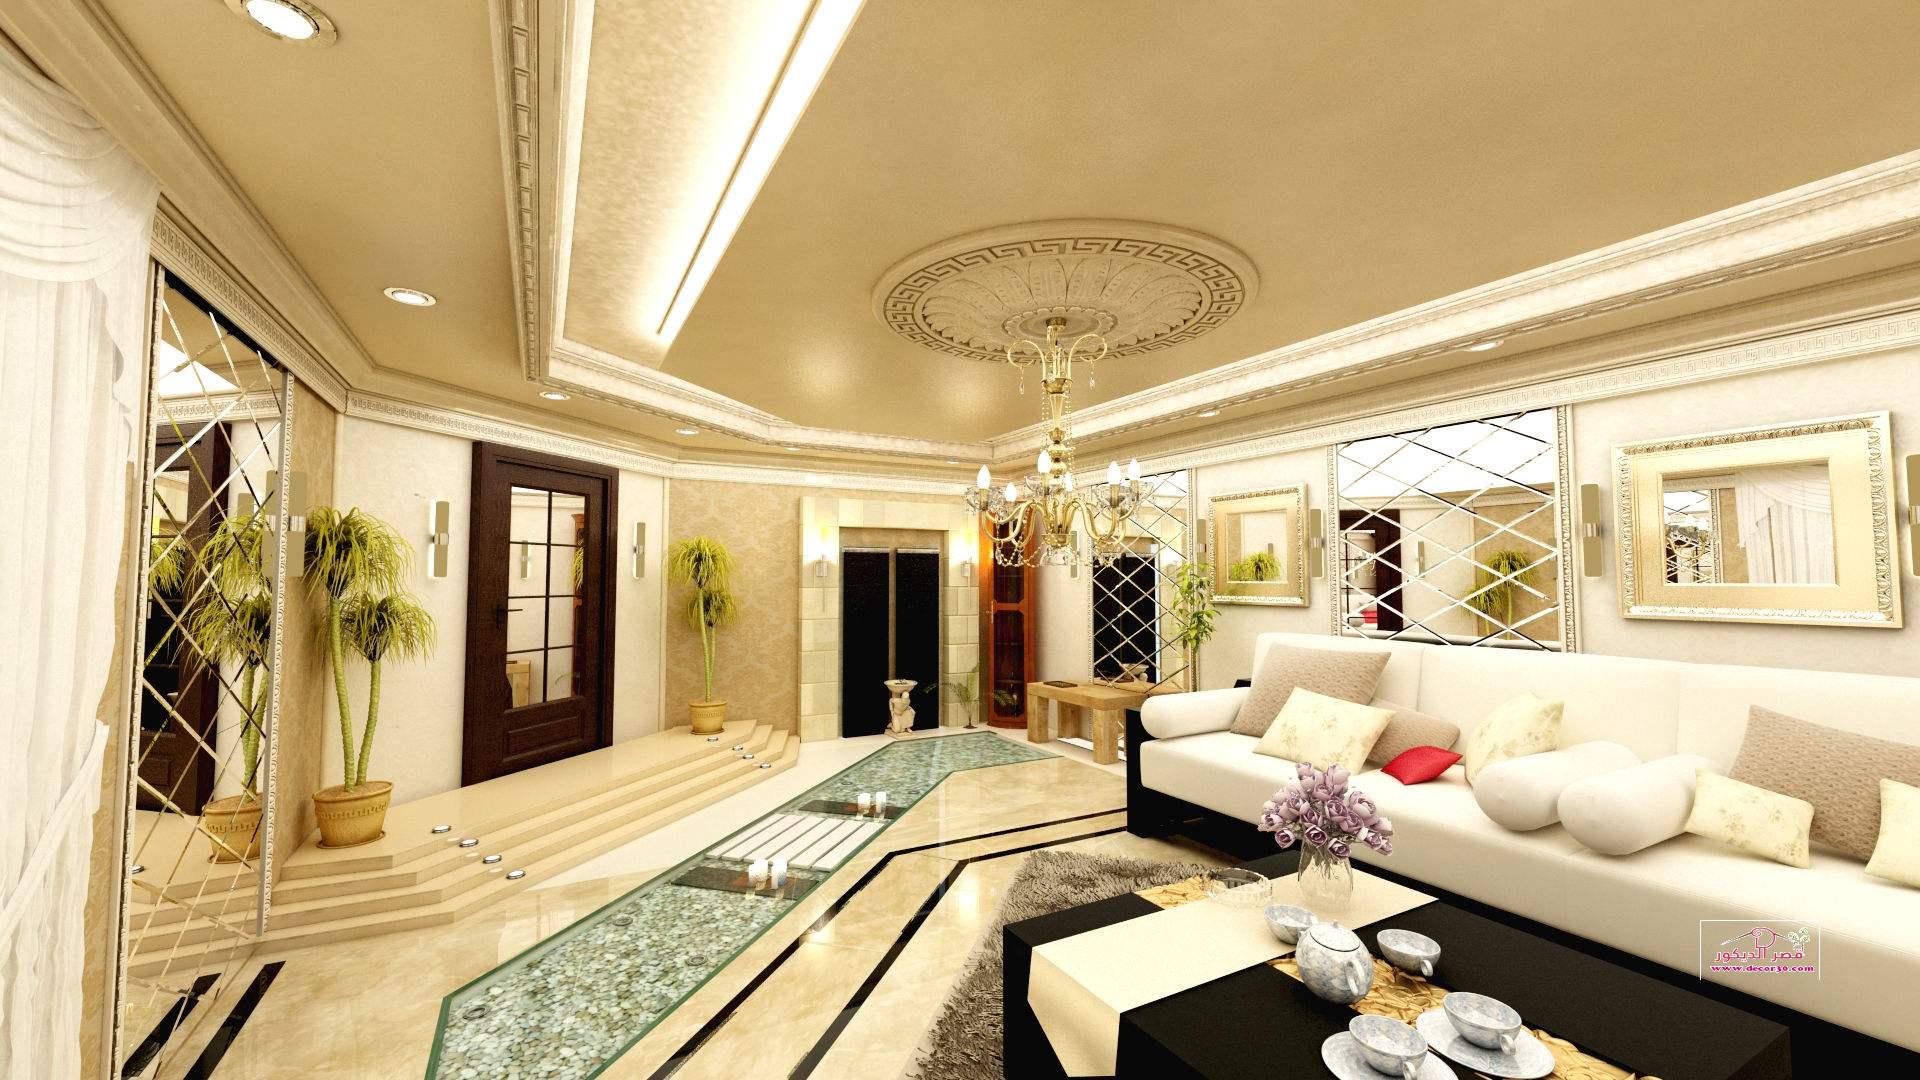 جبس بورد اسقف مجالس,Gypsum board ceiling for meeting room قصر الديكور